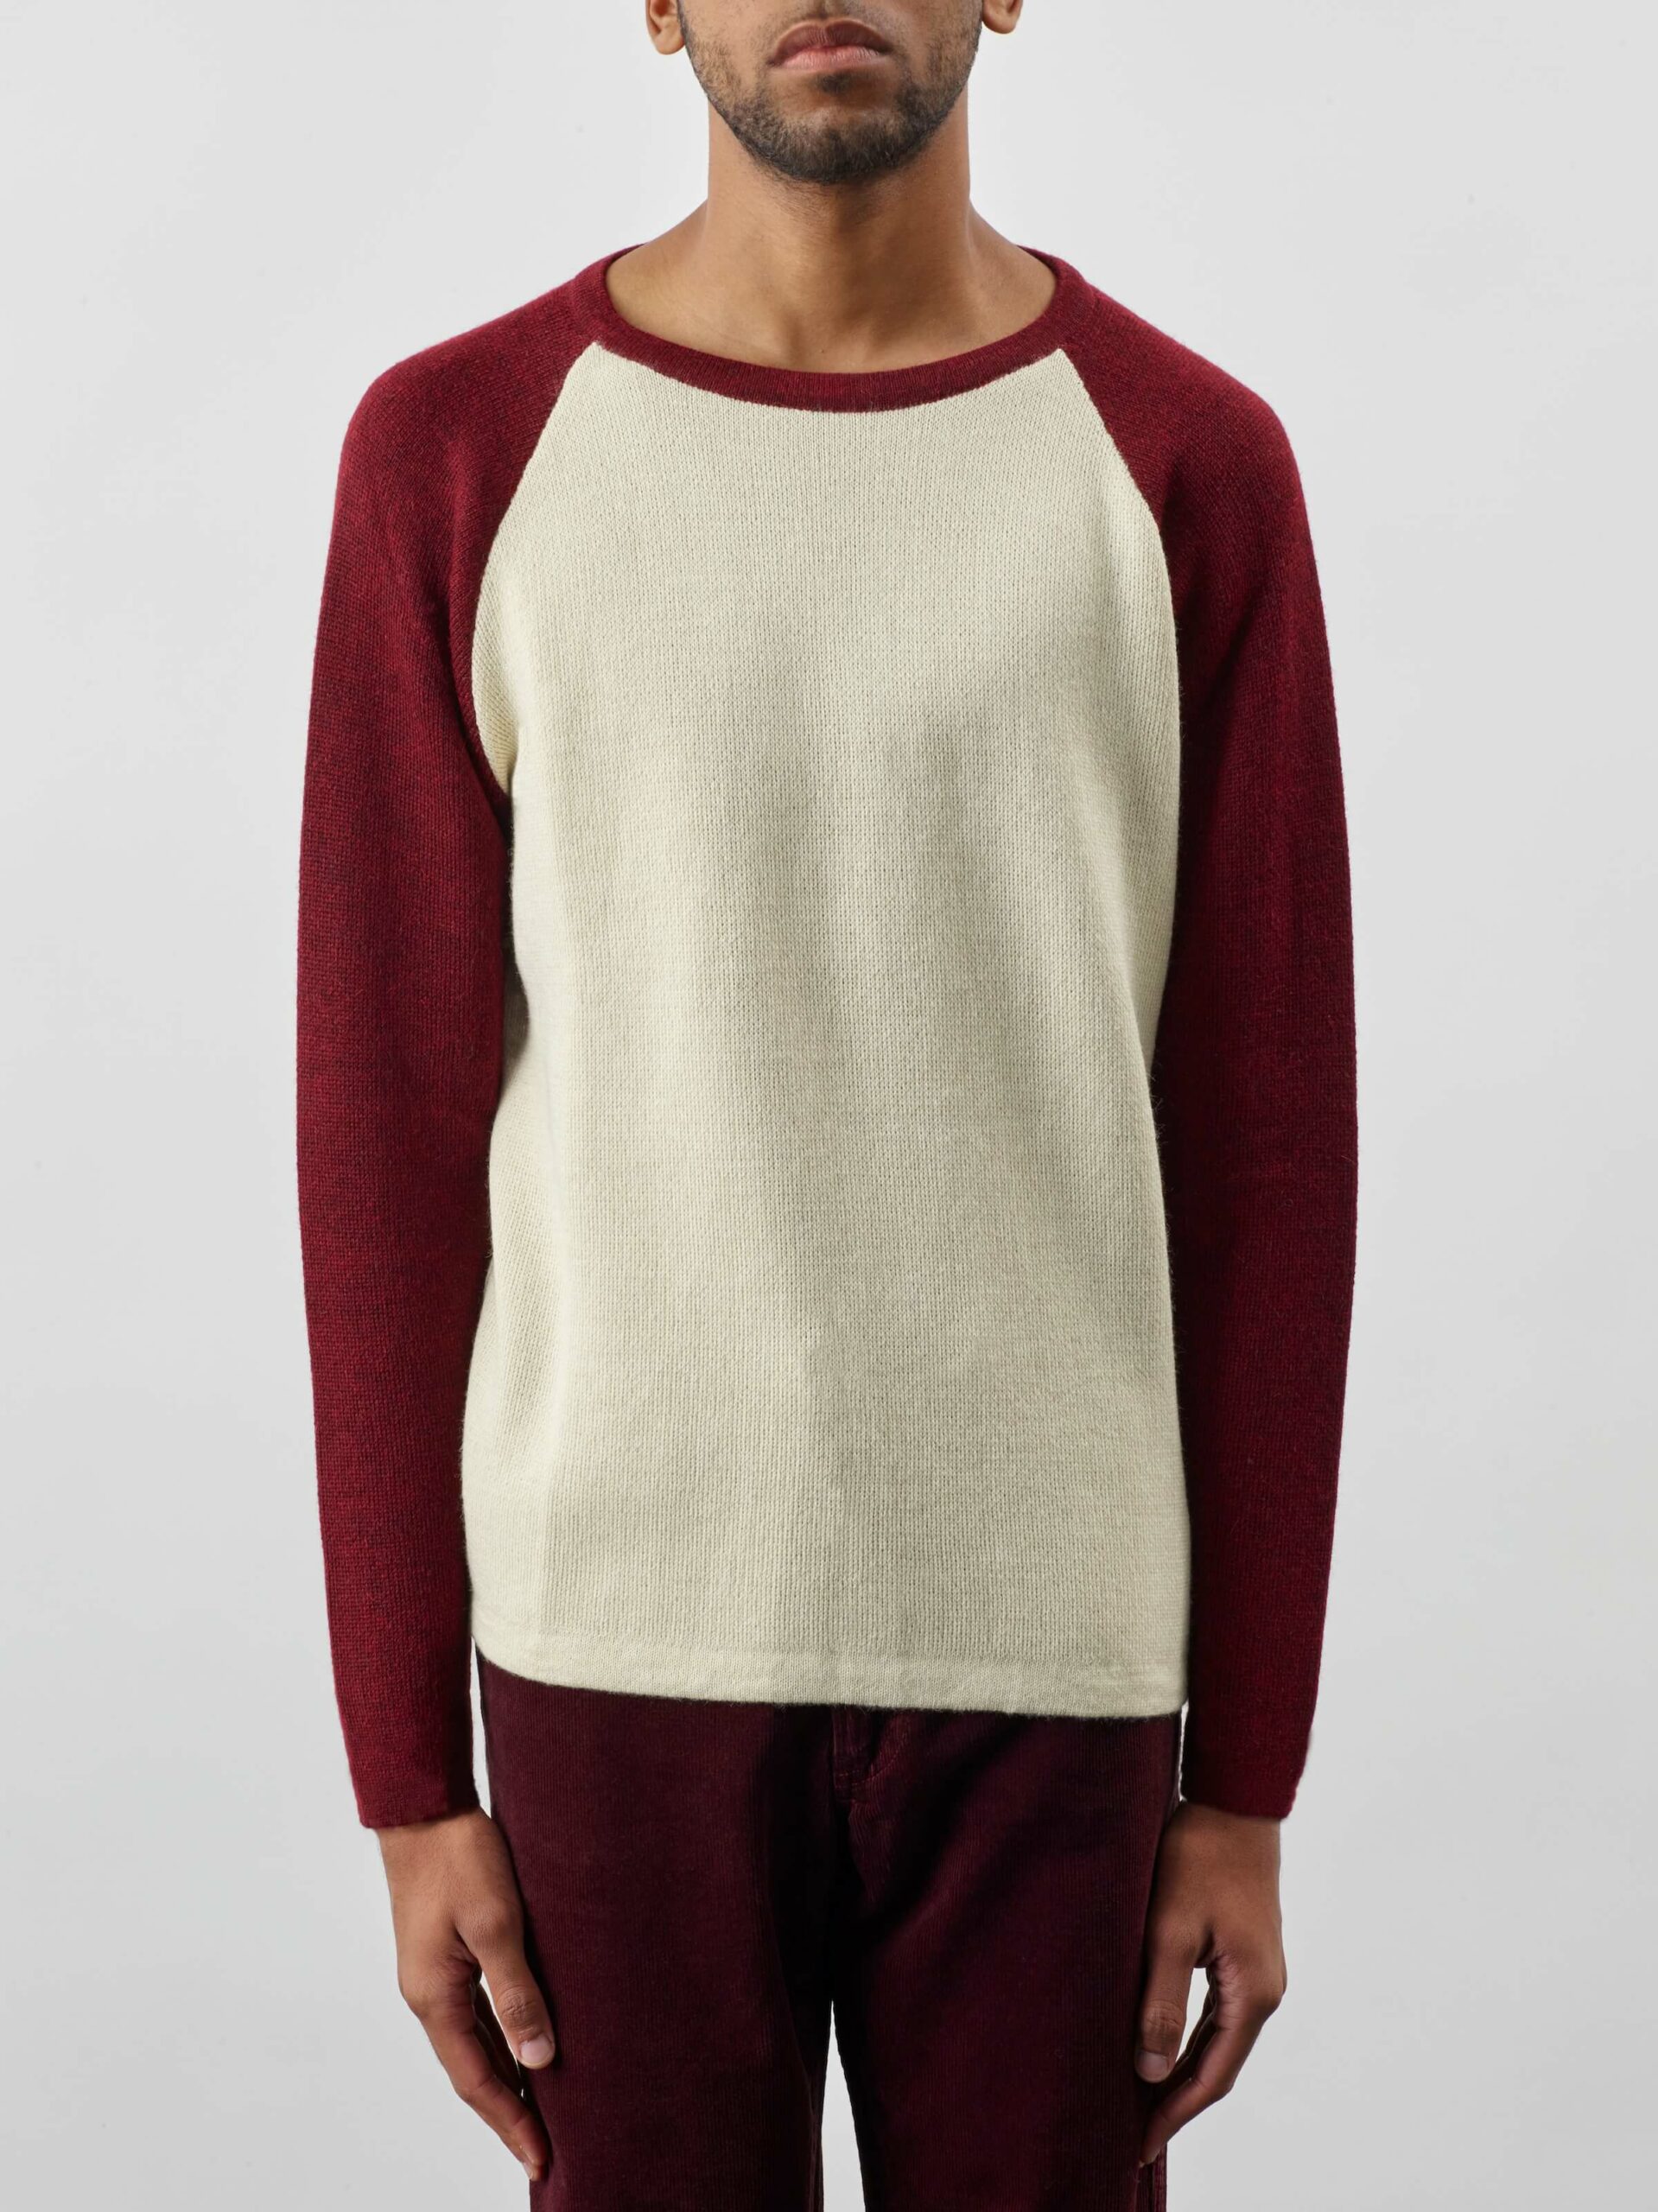 Product image for »Baseball Bordeaux« Raglan Sweater Baby Alpaca | Bordeaux Ecru